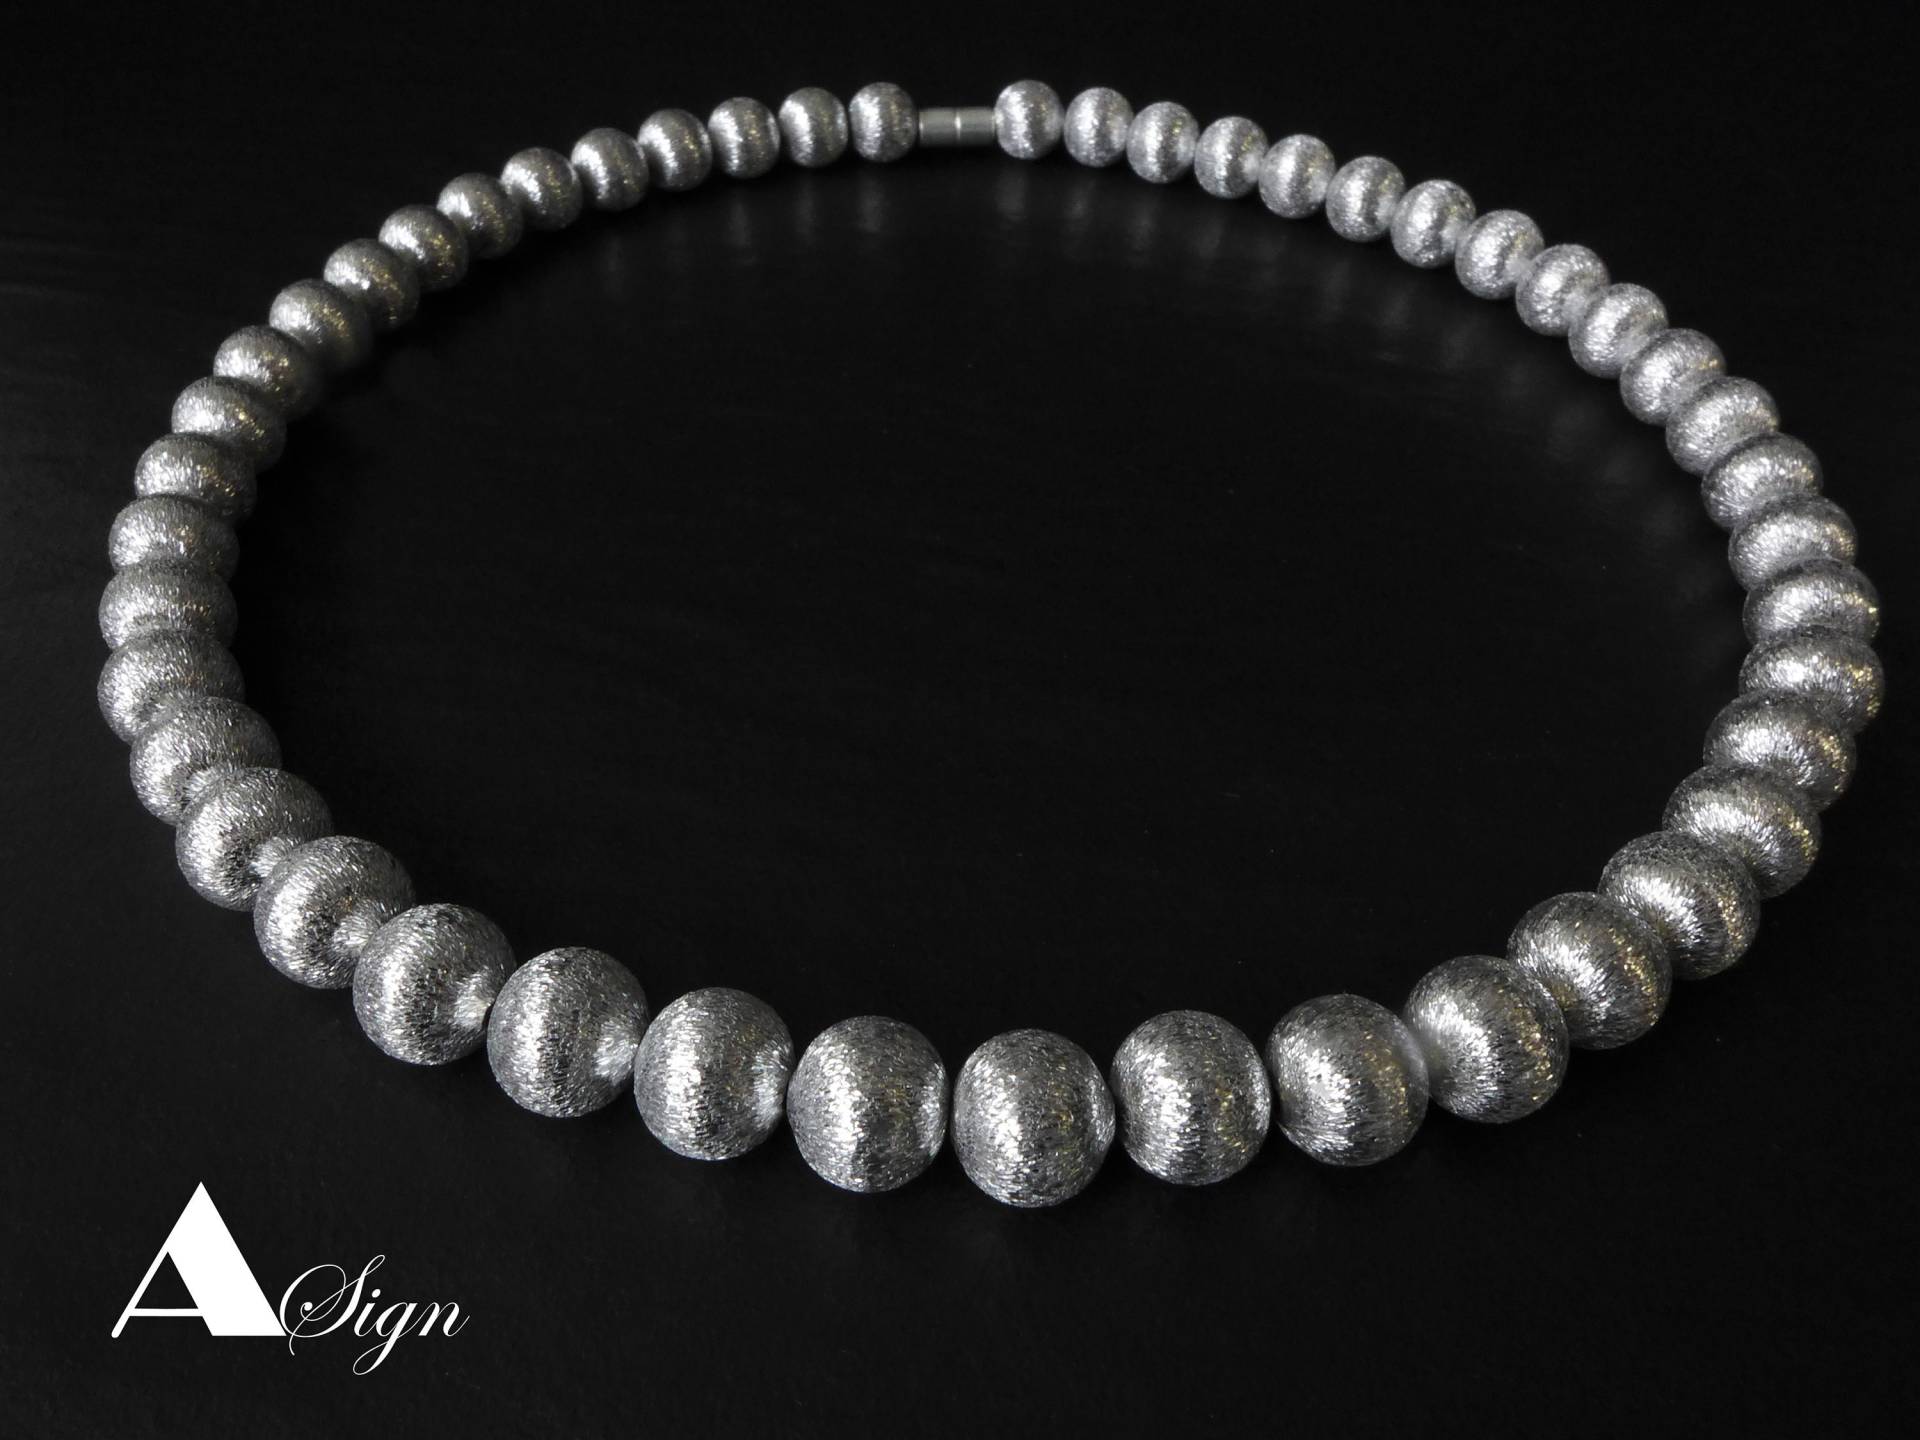 A Sign Brush Damen Kette/Halskette Aluminium-Perle Stardust Brillianteffekt 10 Mm Magnet-Verschluss Silber von ASignSchmuckDesign